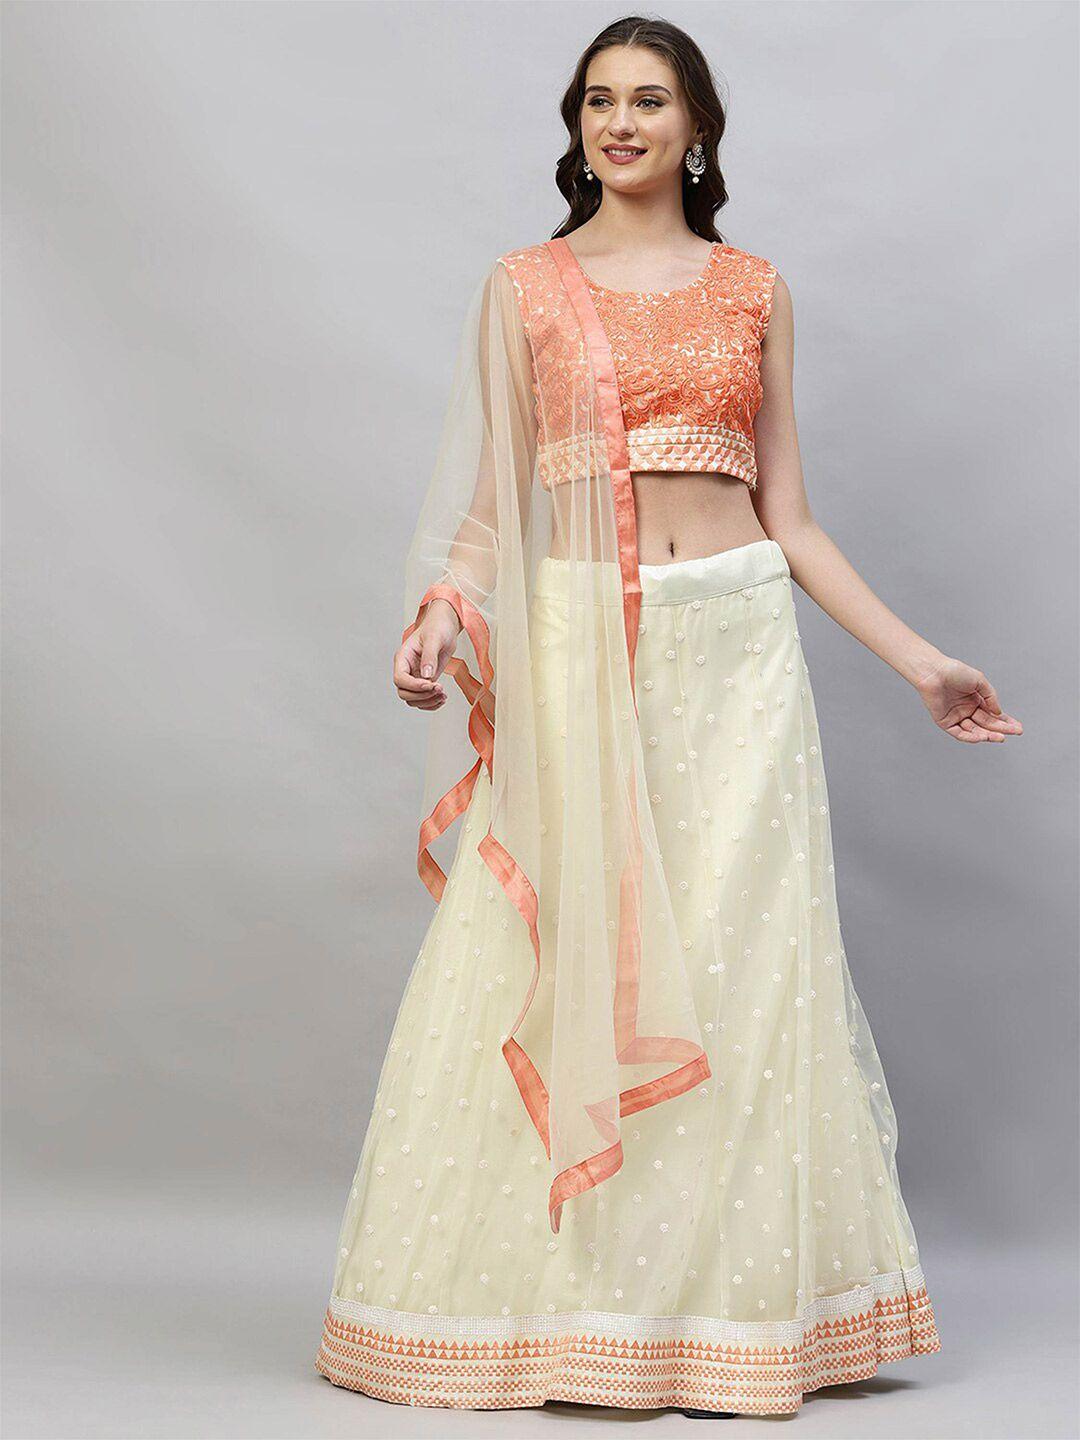 redround orange & cream-coloured embroidered thread work semi-stitched lehenga & unstitched blouse with